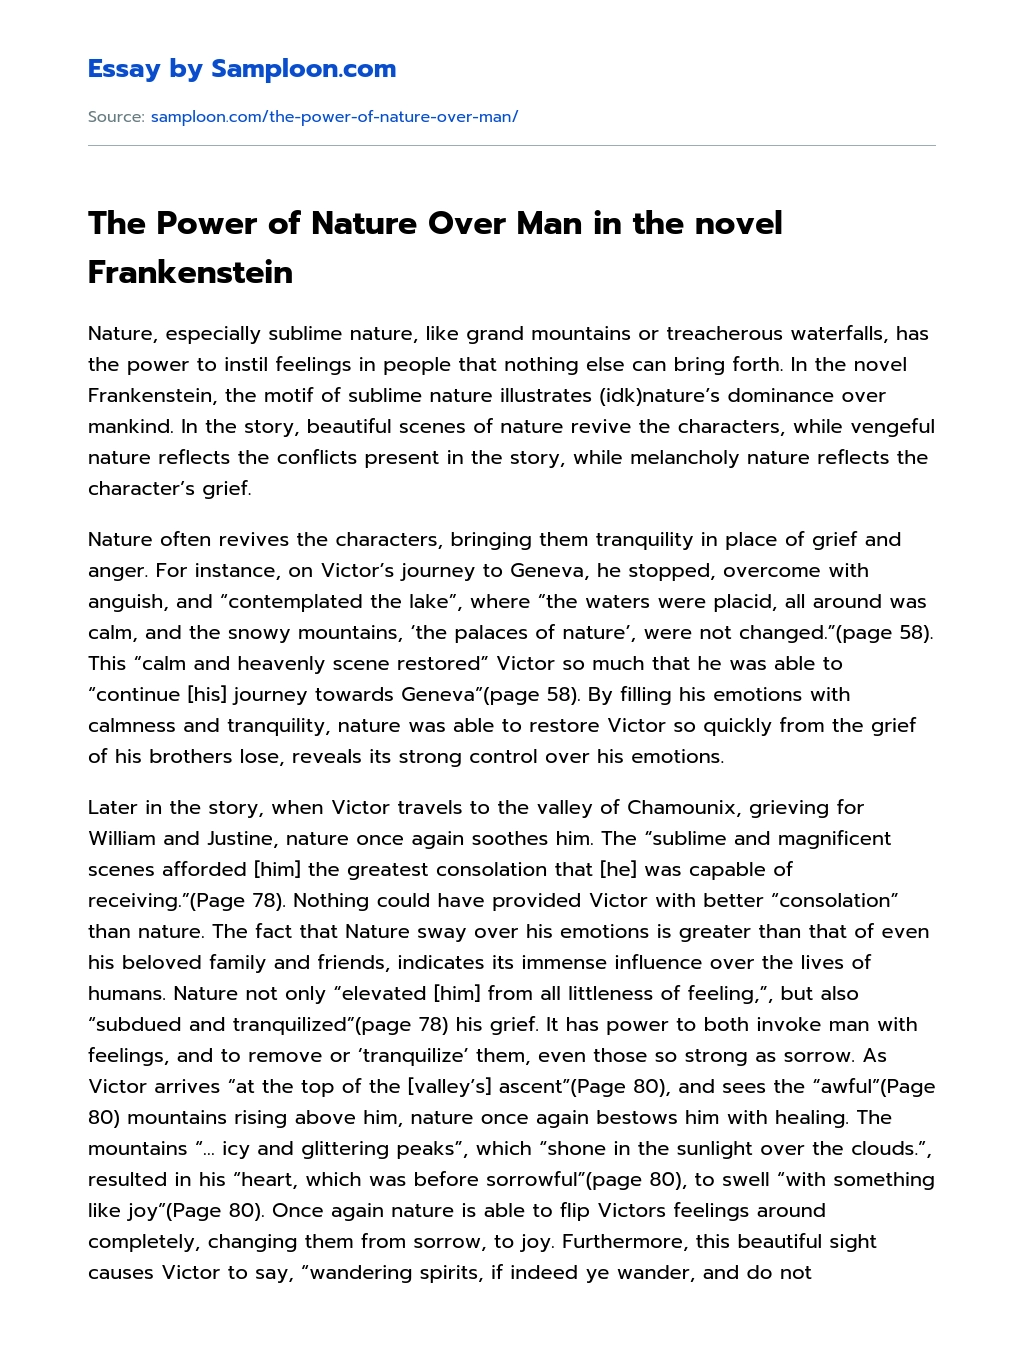 The Power of Nature Over Man in the novel Frankenstein essay